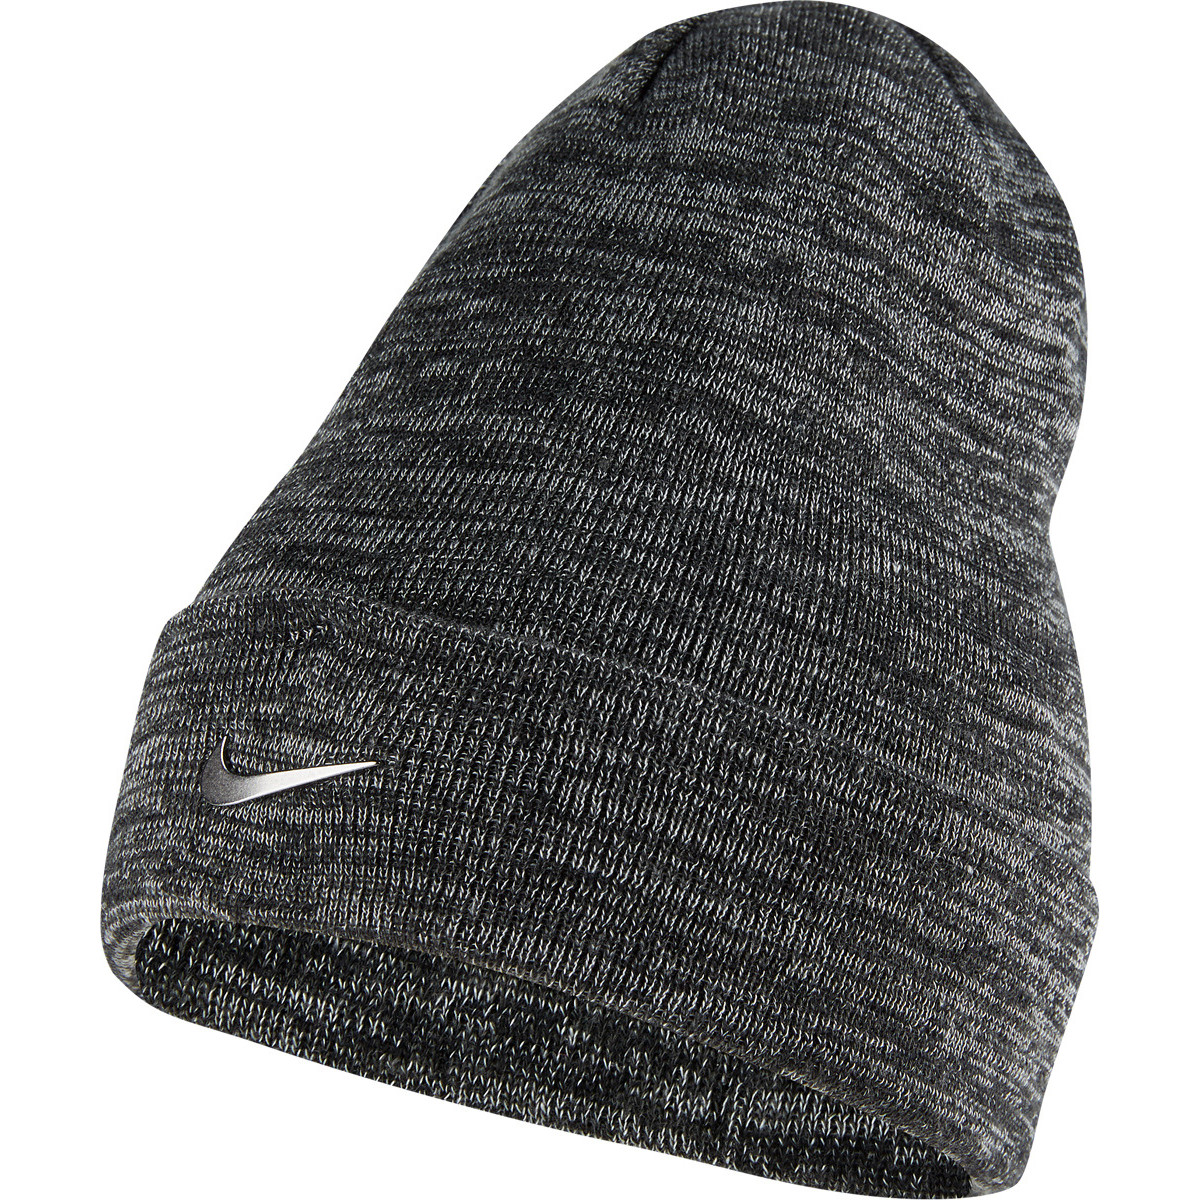 Bonnet Nike sportswear - Gants, bonnet - Tennis Achat